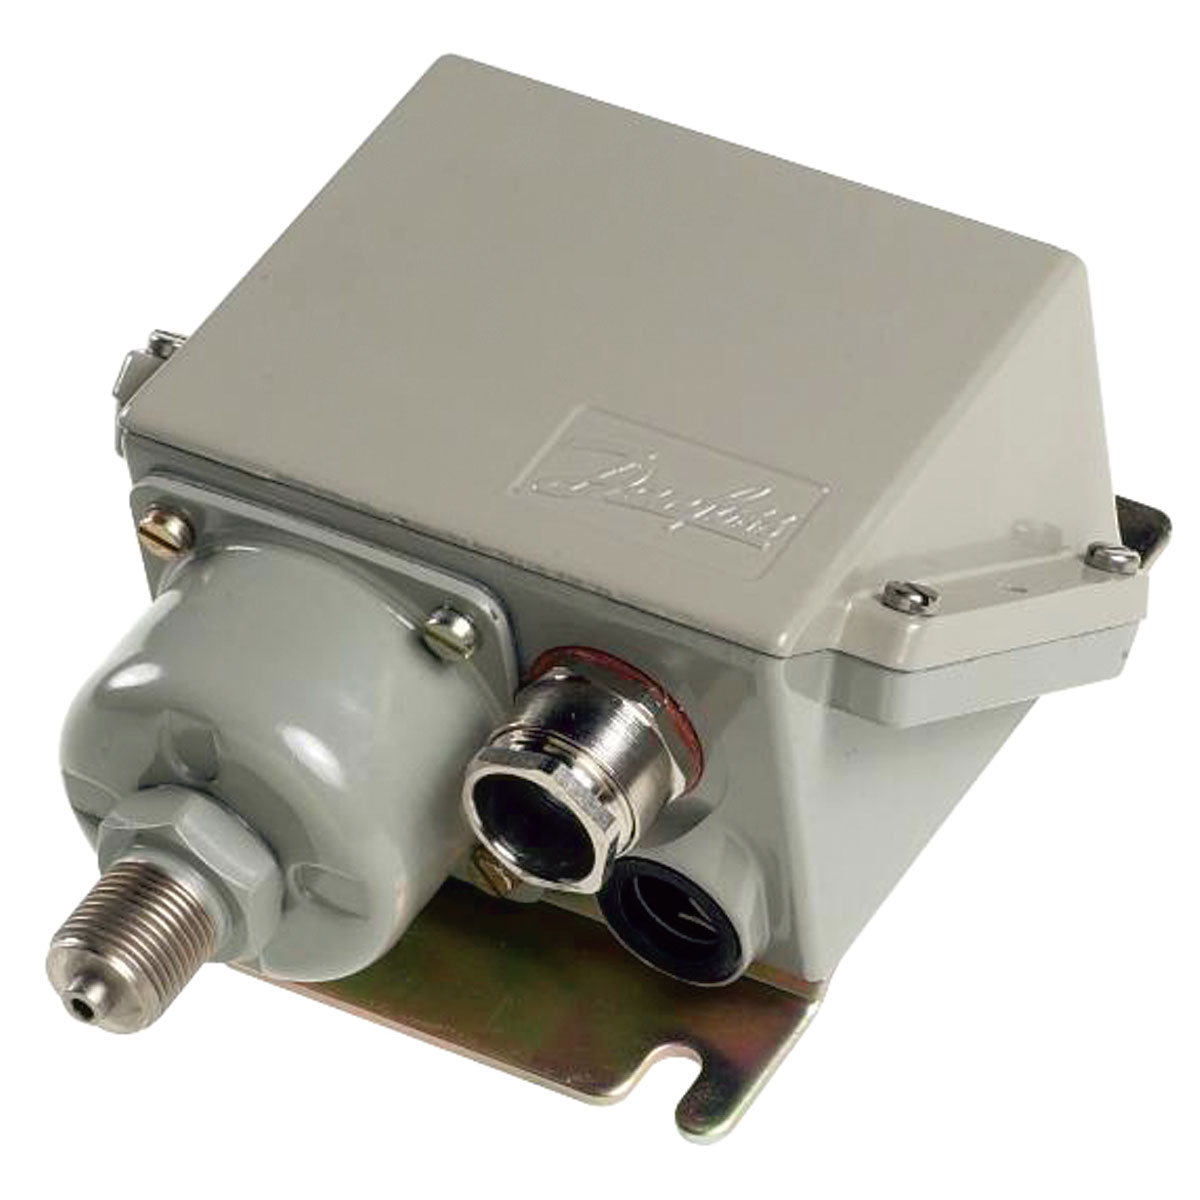 KPS33-3104 Pressure Switch 1/4" 0-3.5 Bar